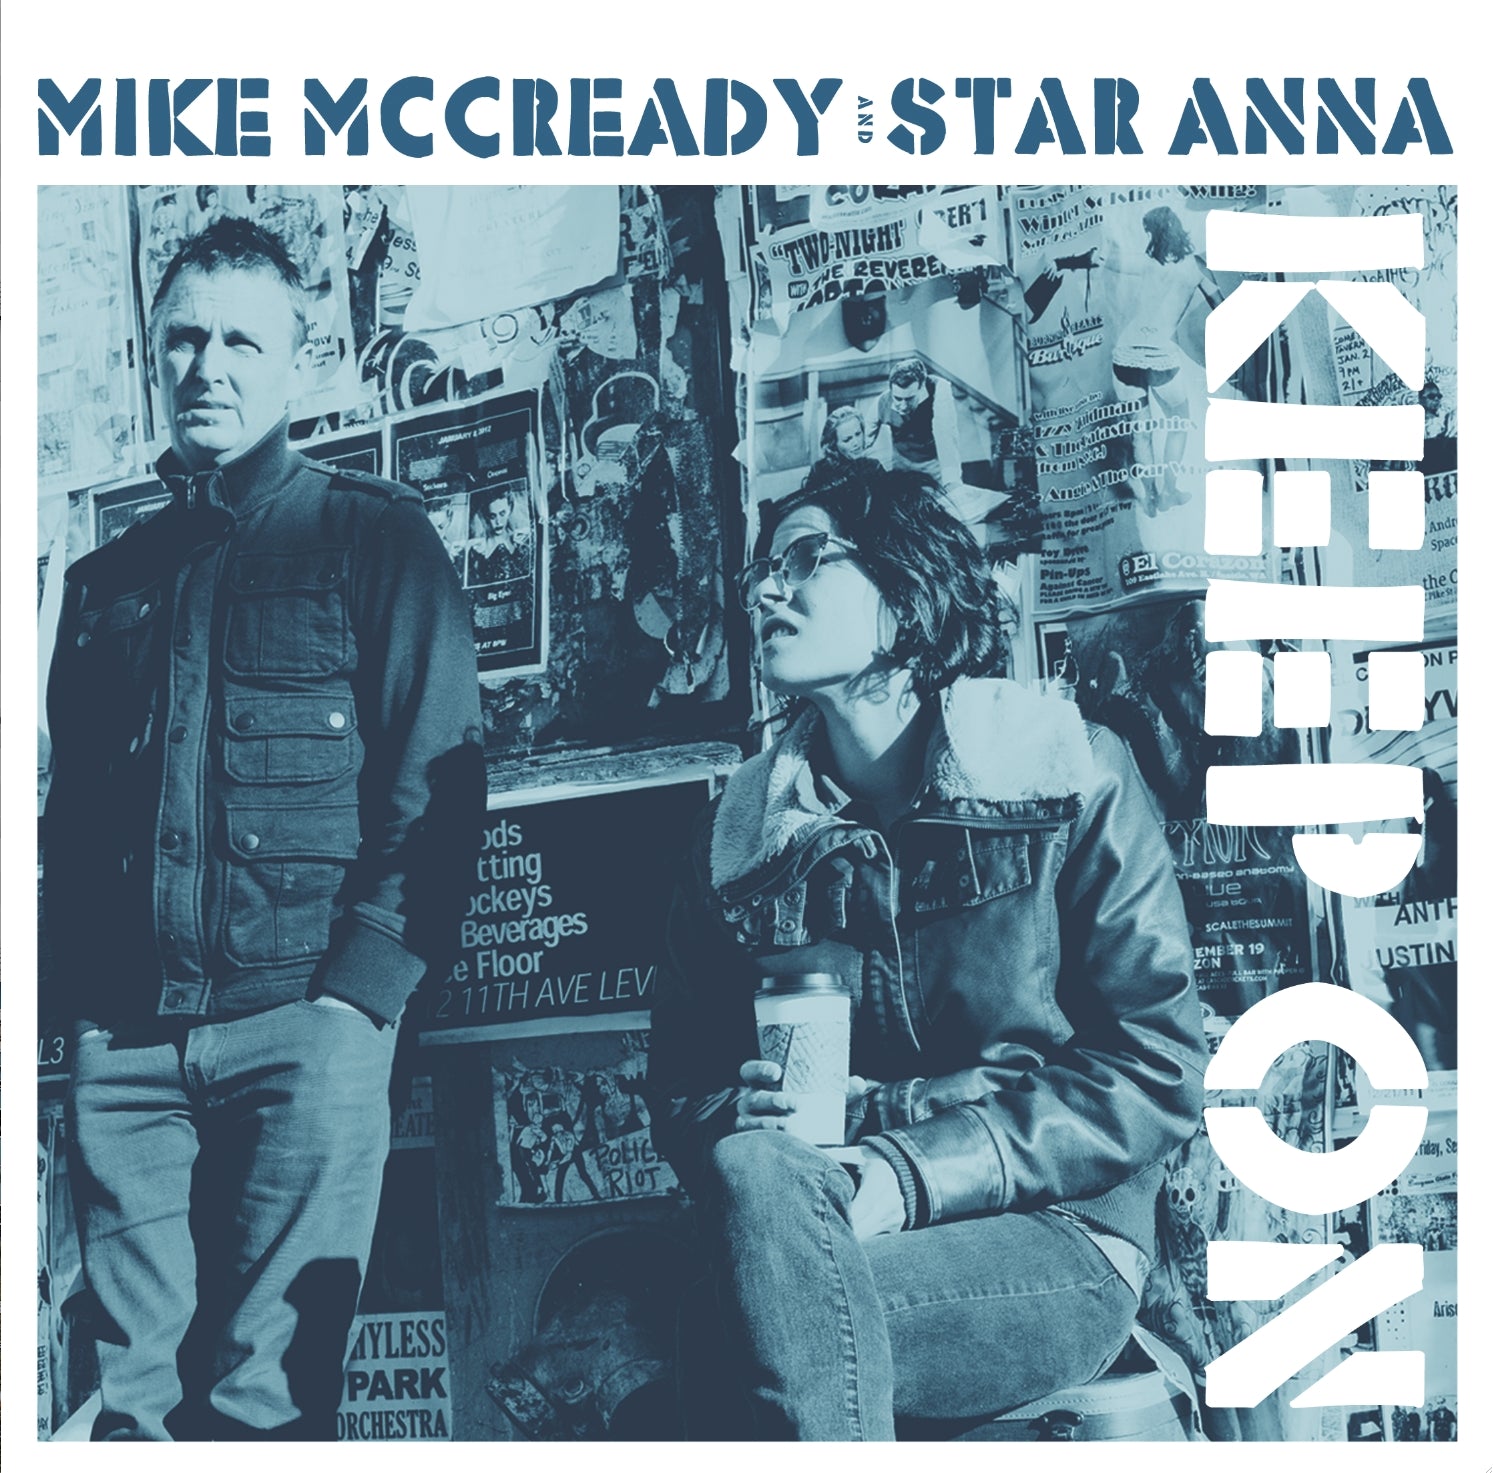 MIKE MCCREADY & STAR ANNA DIGITAL DOWNLOAD - MP3